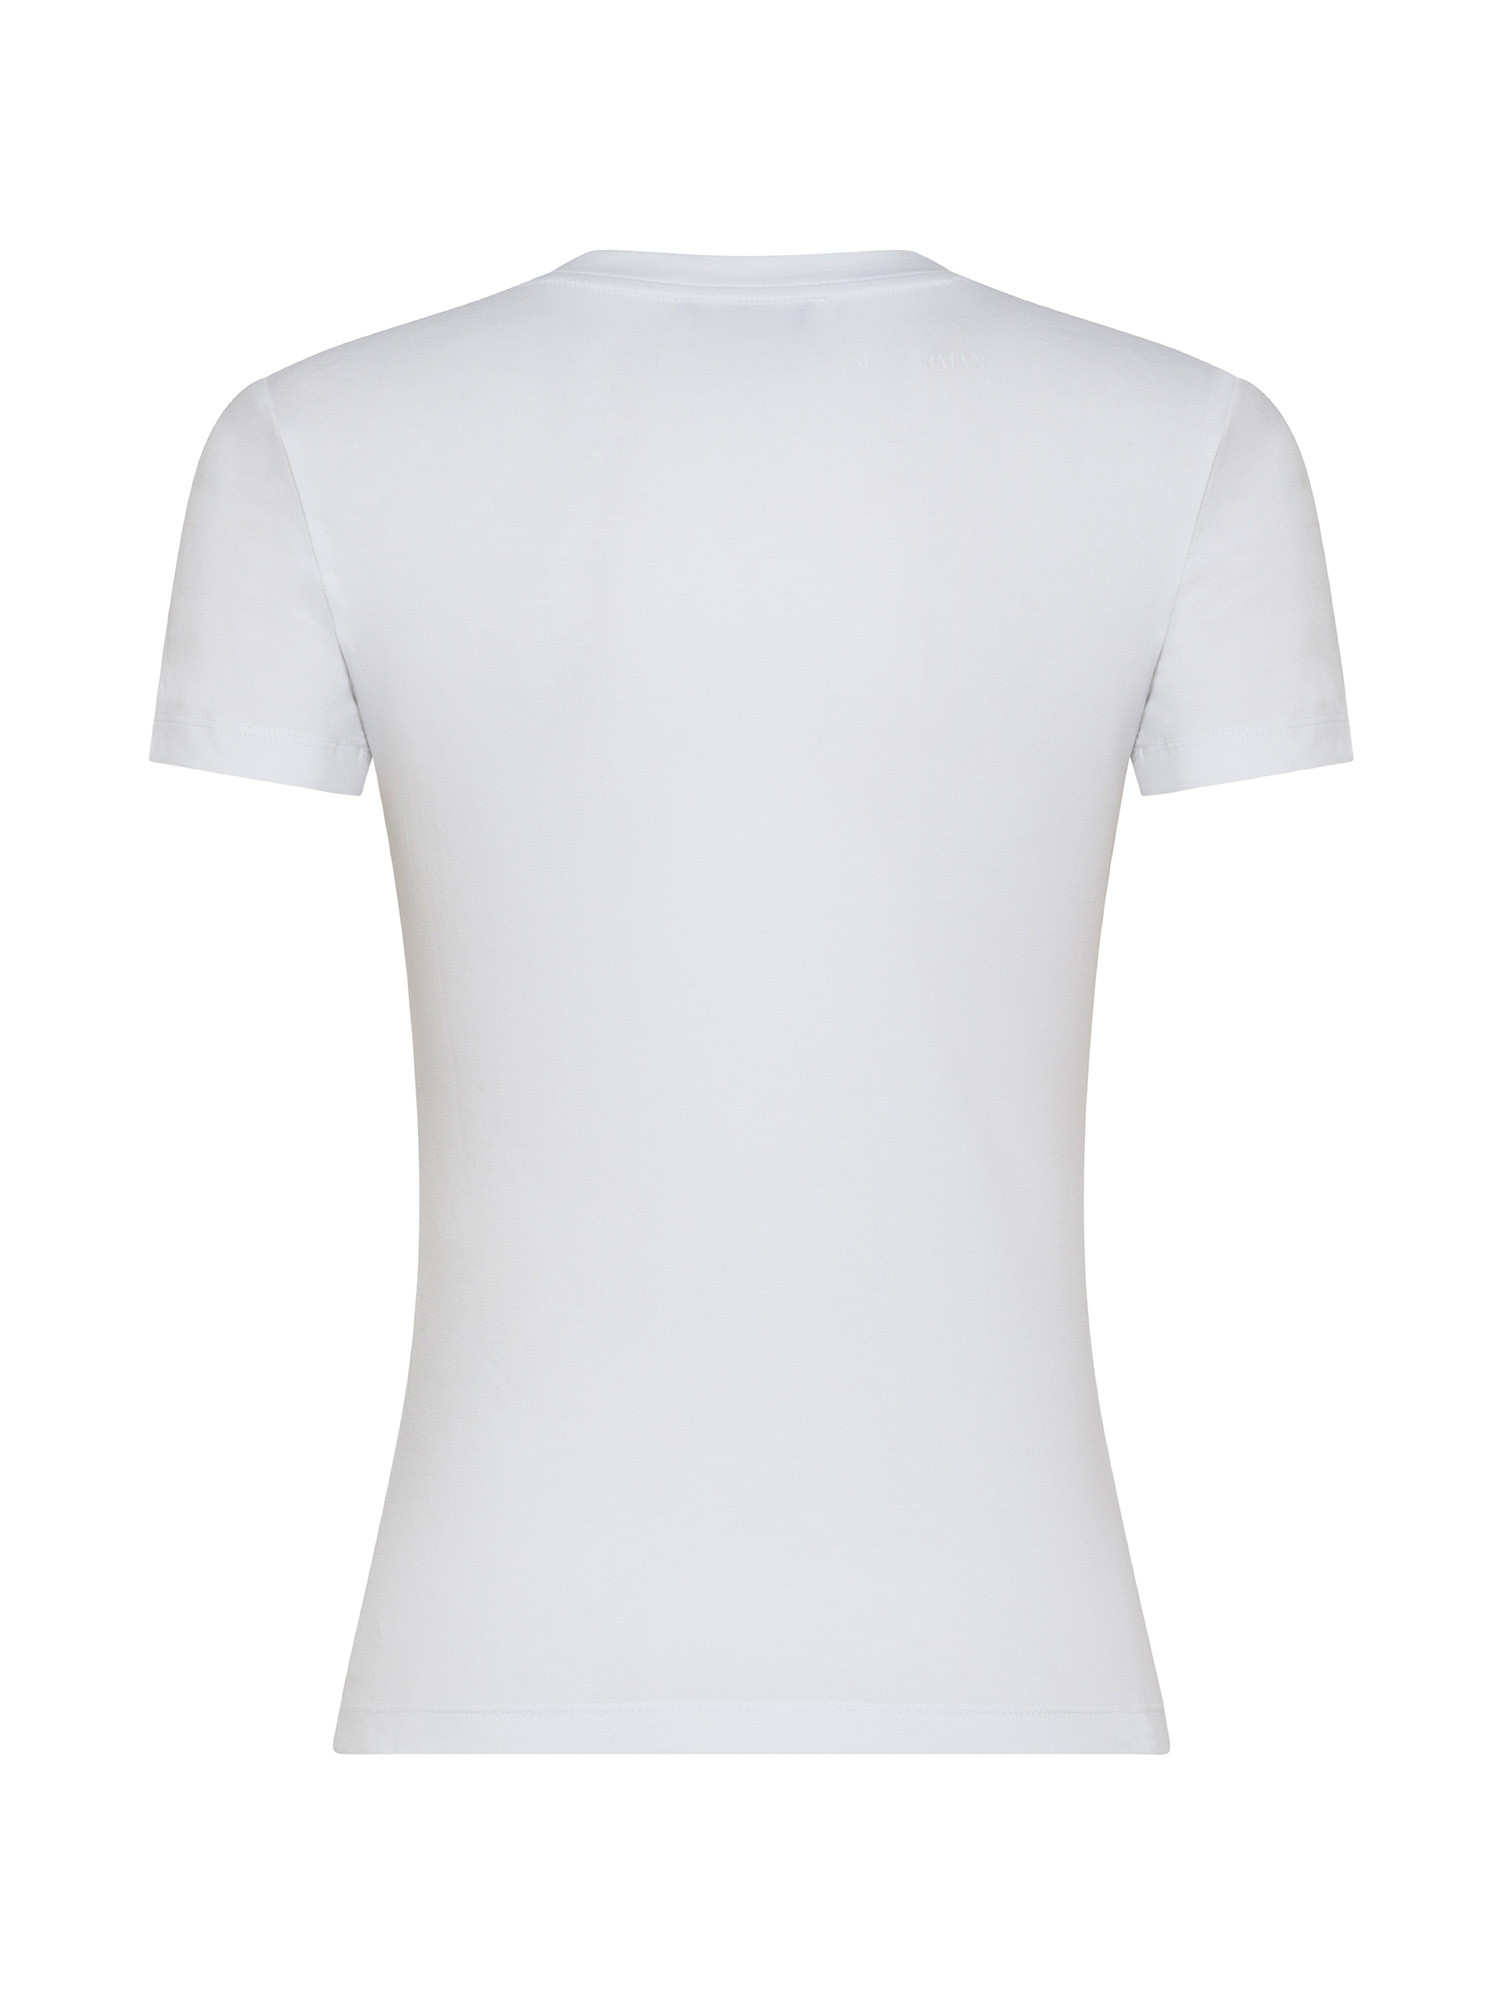 Emporio Armani - T-shirt con logo strass, Bianco, large image number 1